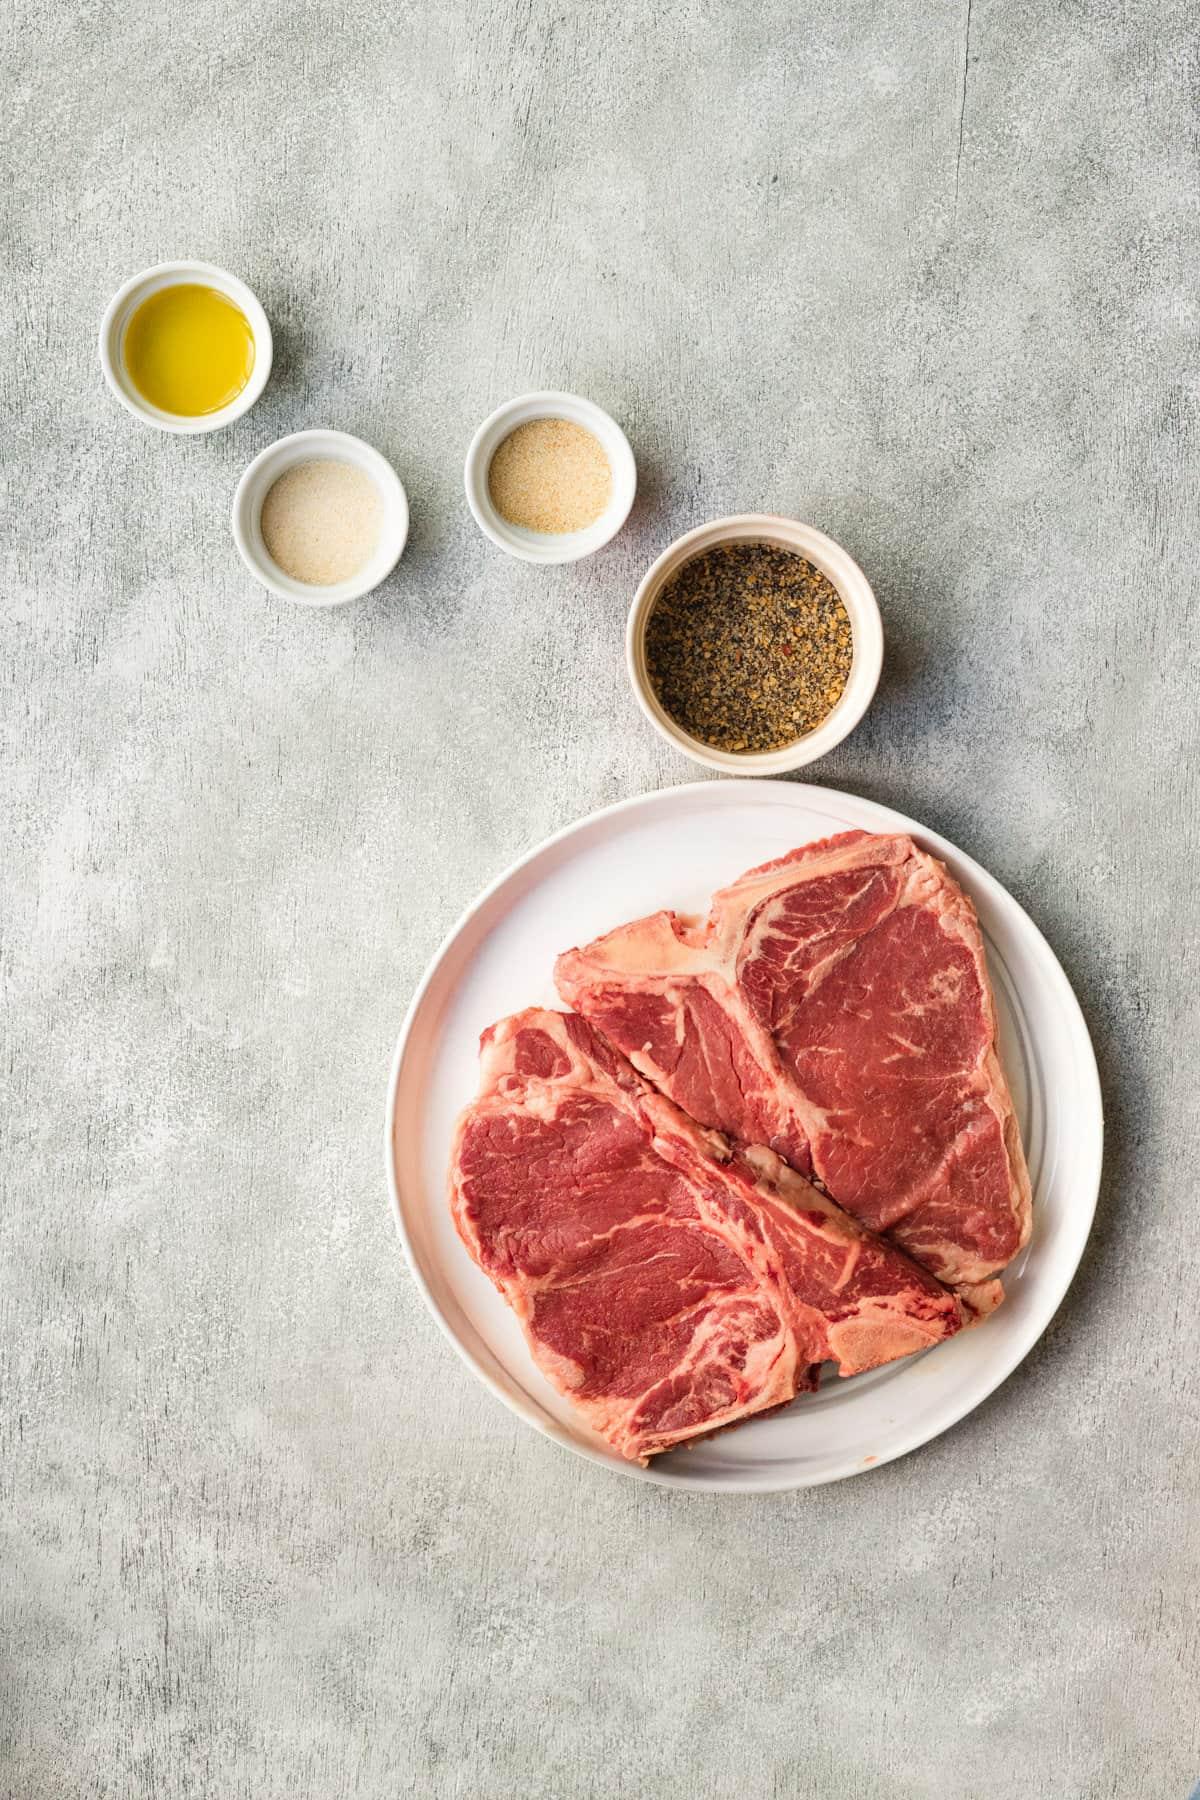 Ingredients for T-Bone Steak